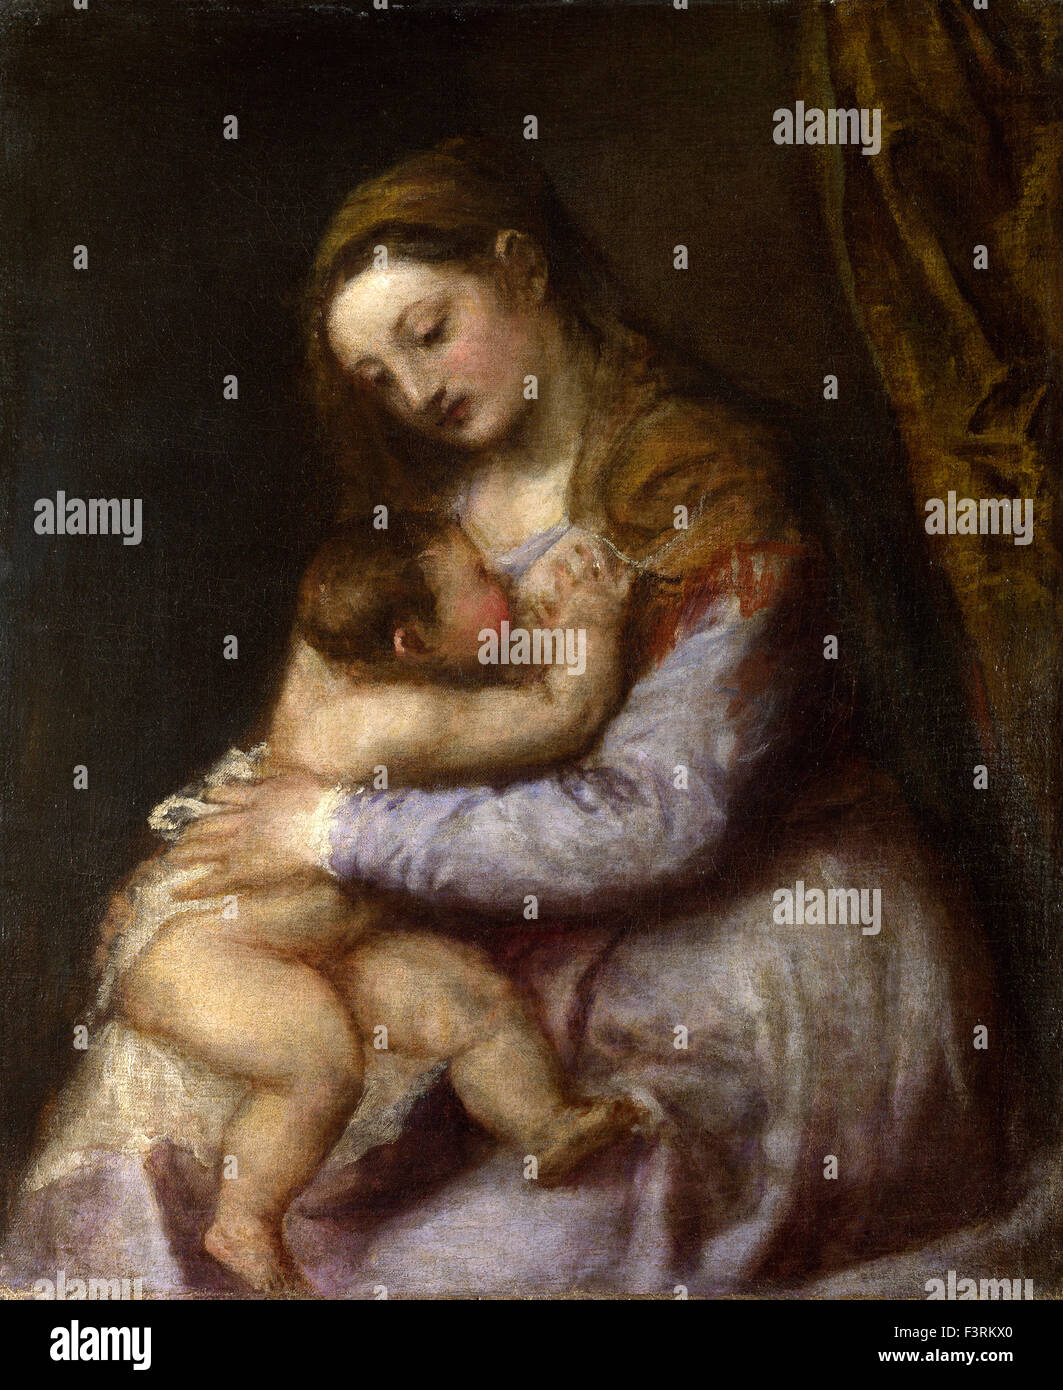 Tiziano Vecellio - Titian - The Virgin Suckling the Infant Christ Stock Photo